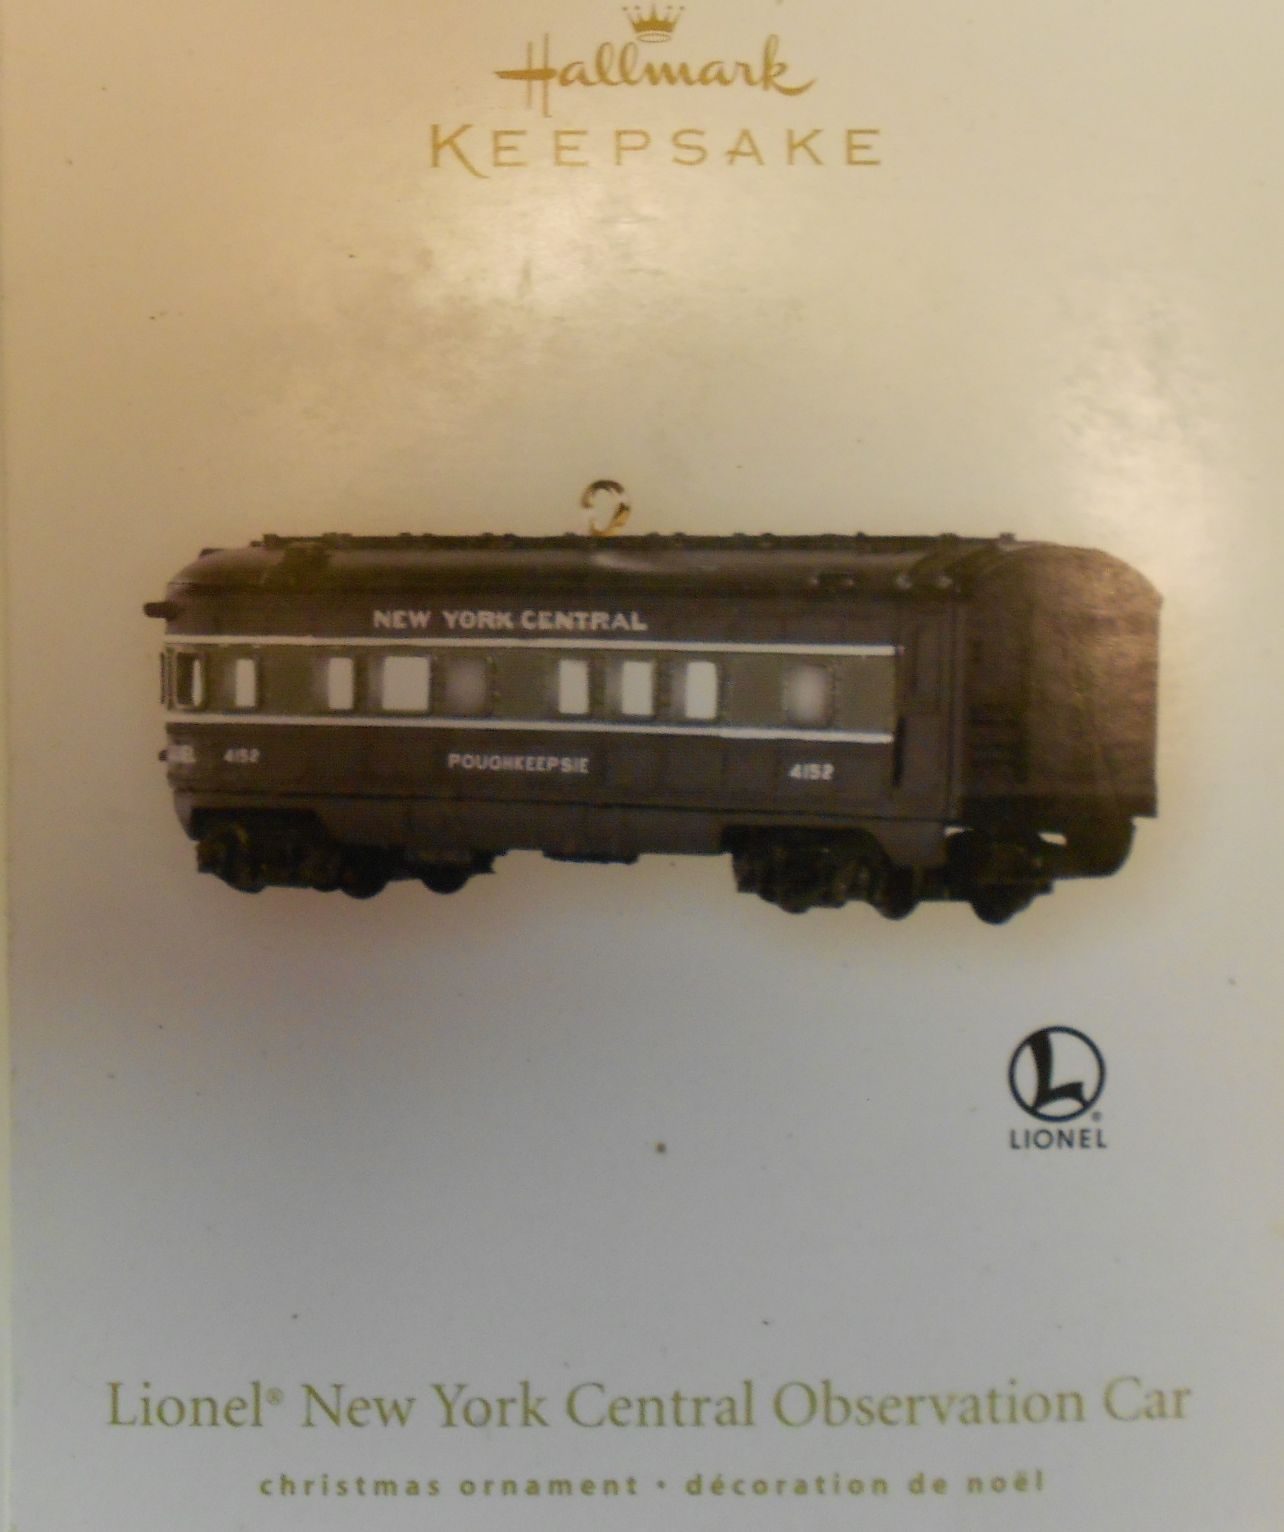 Hallmark QXI2011 Lionel New York Central Observation Car Keepsafe Ornament